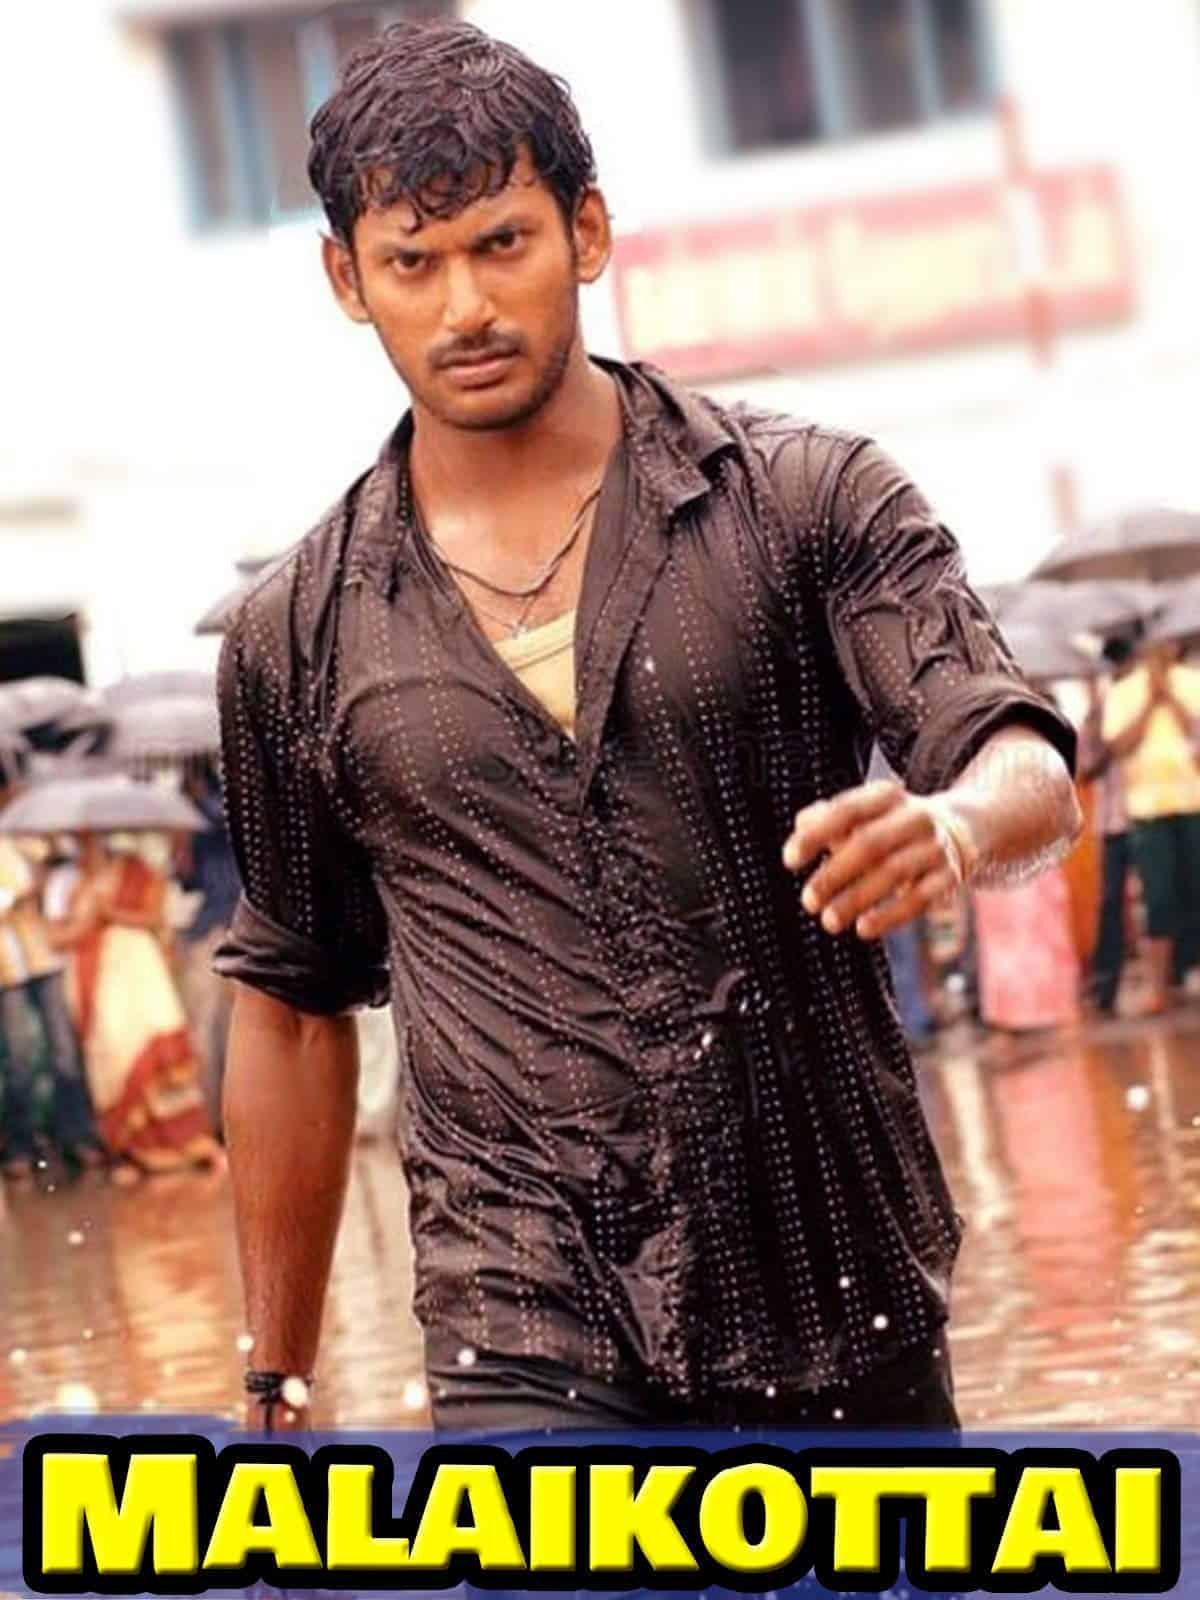 Malaikottai 2007 Tamil Action Movie Online